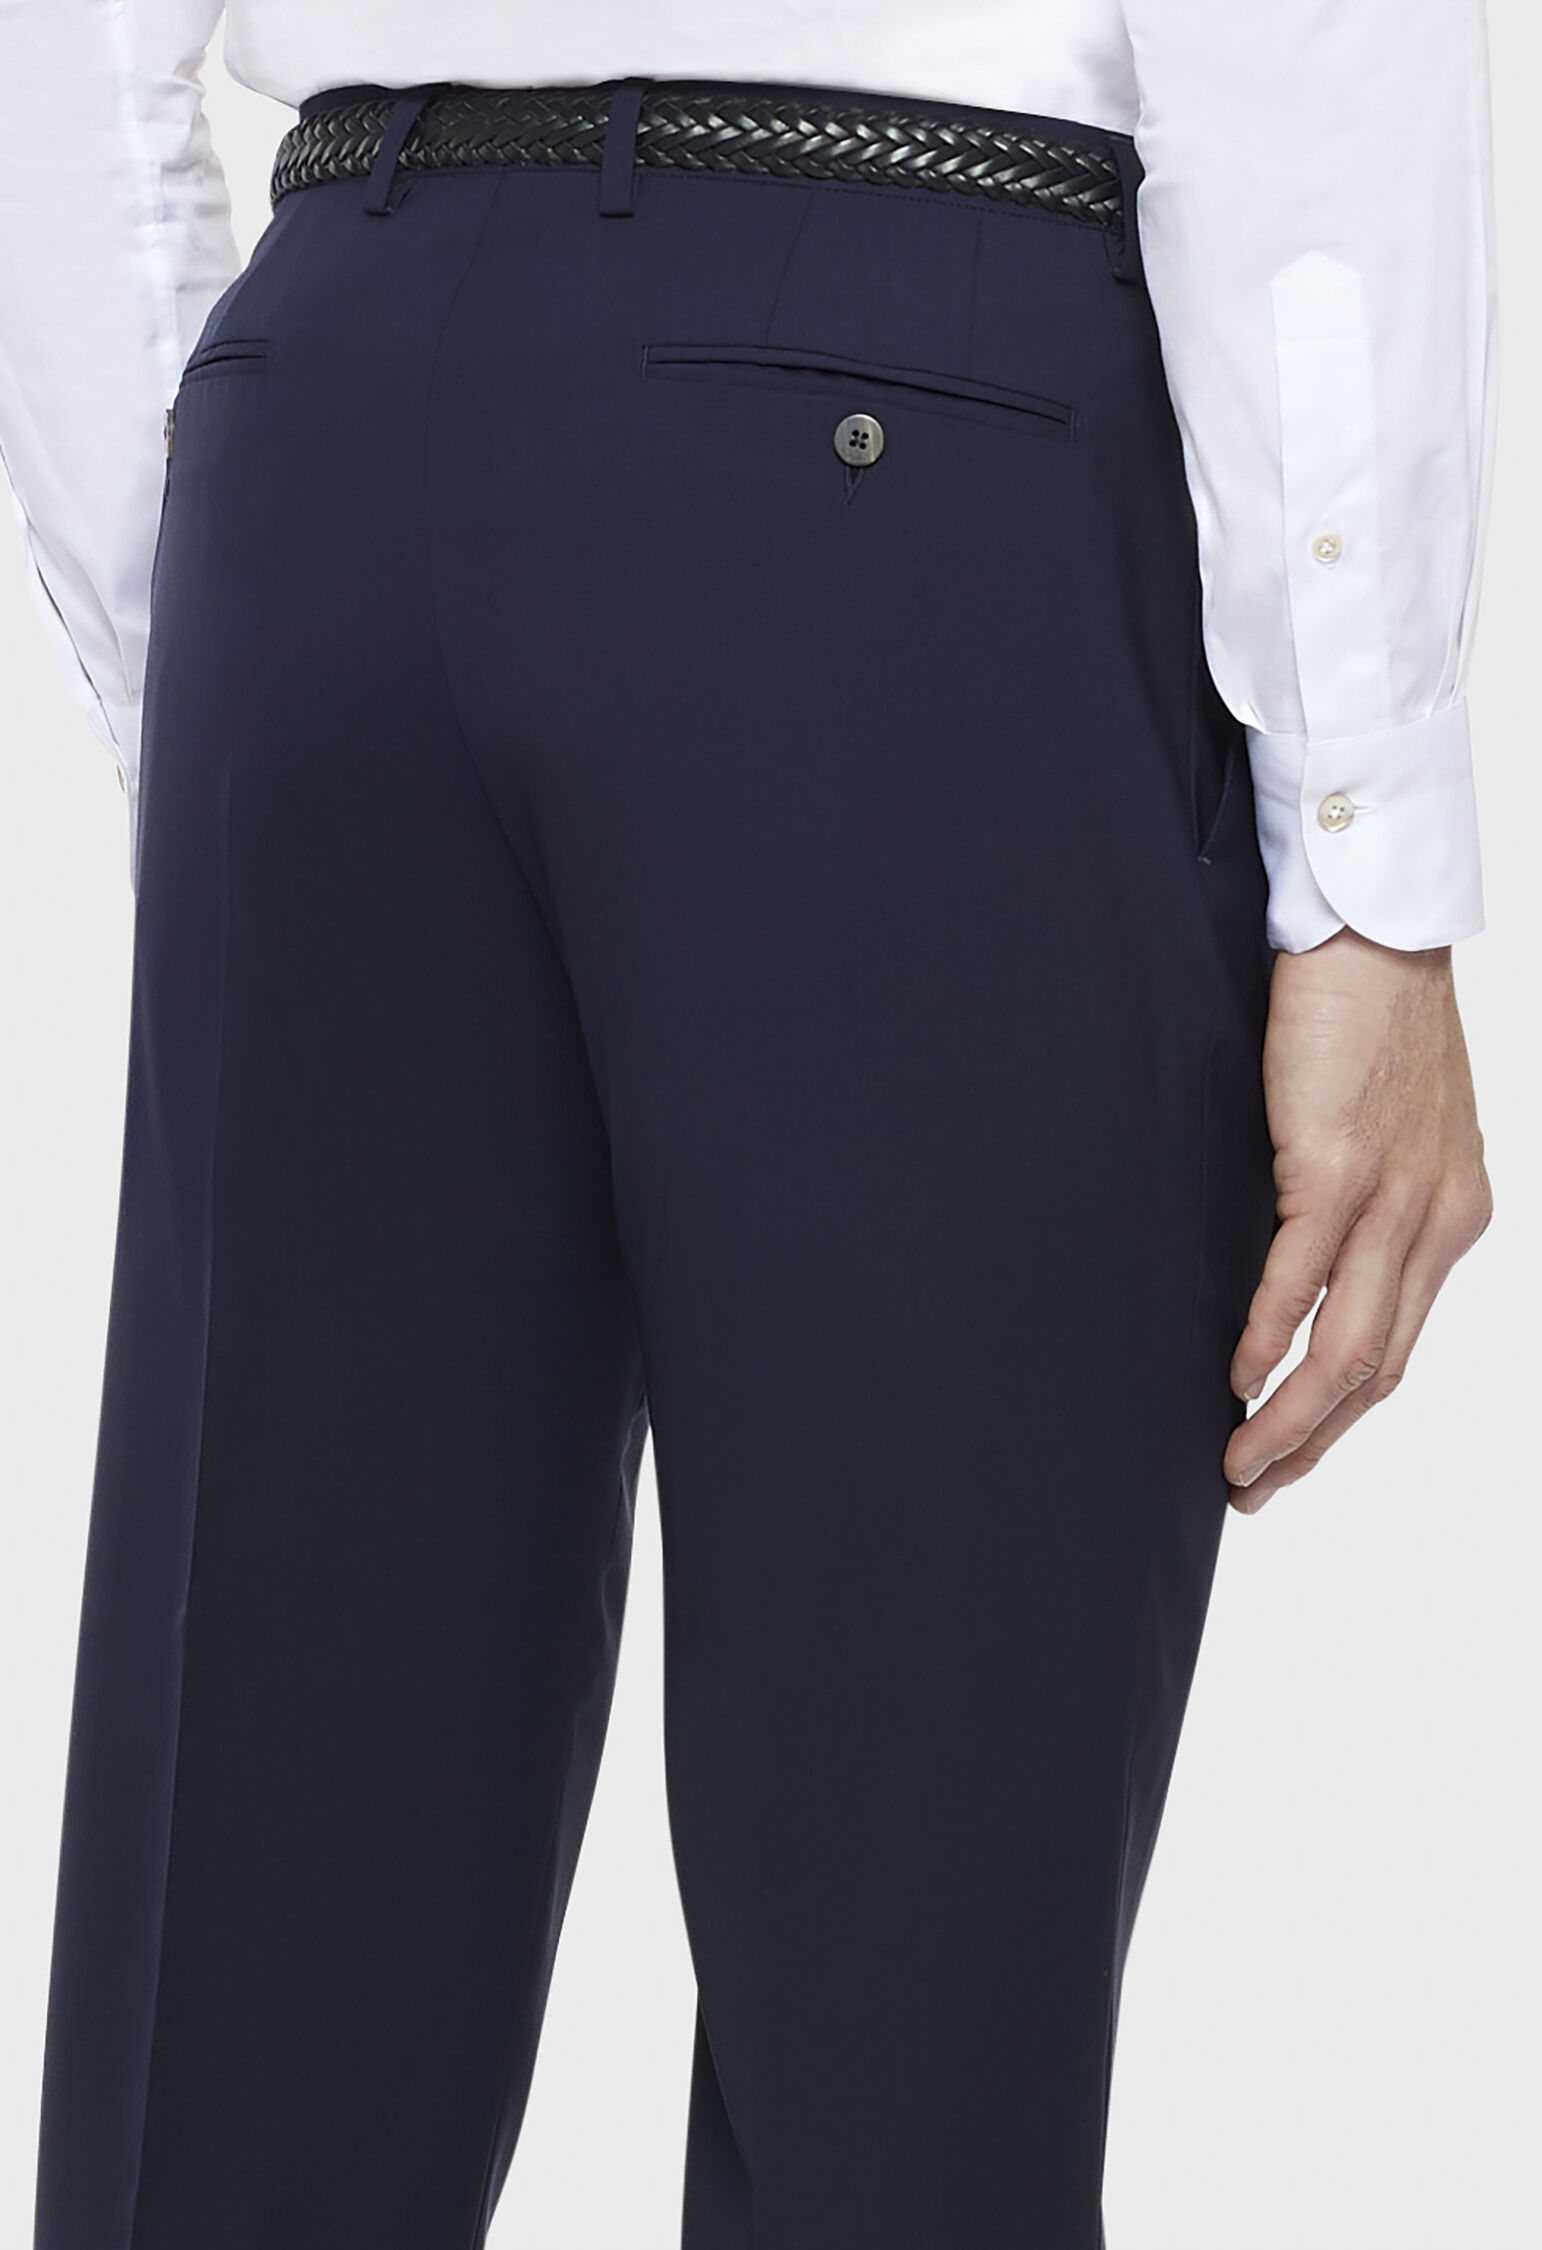 ASOS EDITION smart 100% wool high waist trouser in black | ASOS